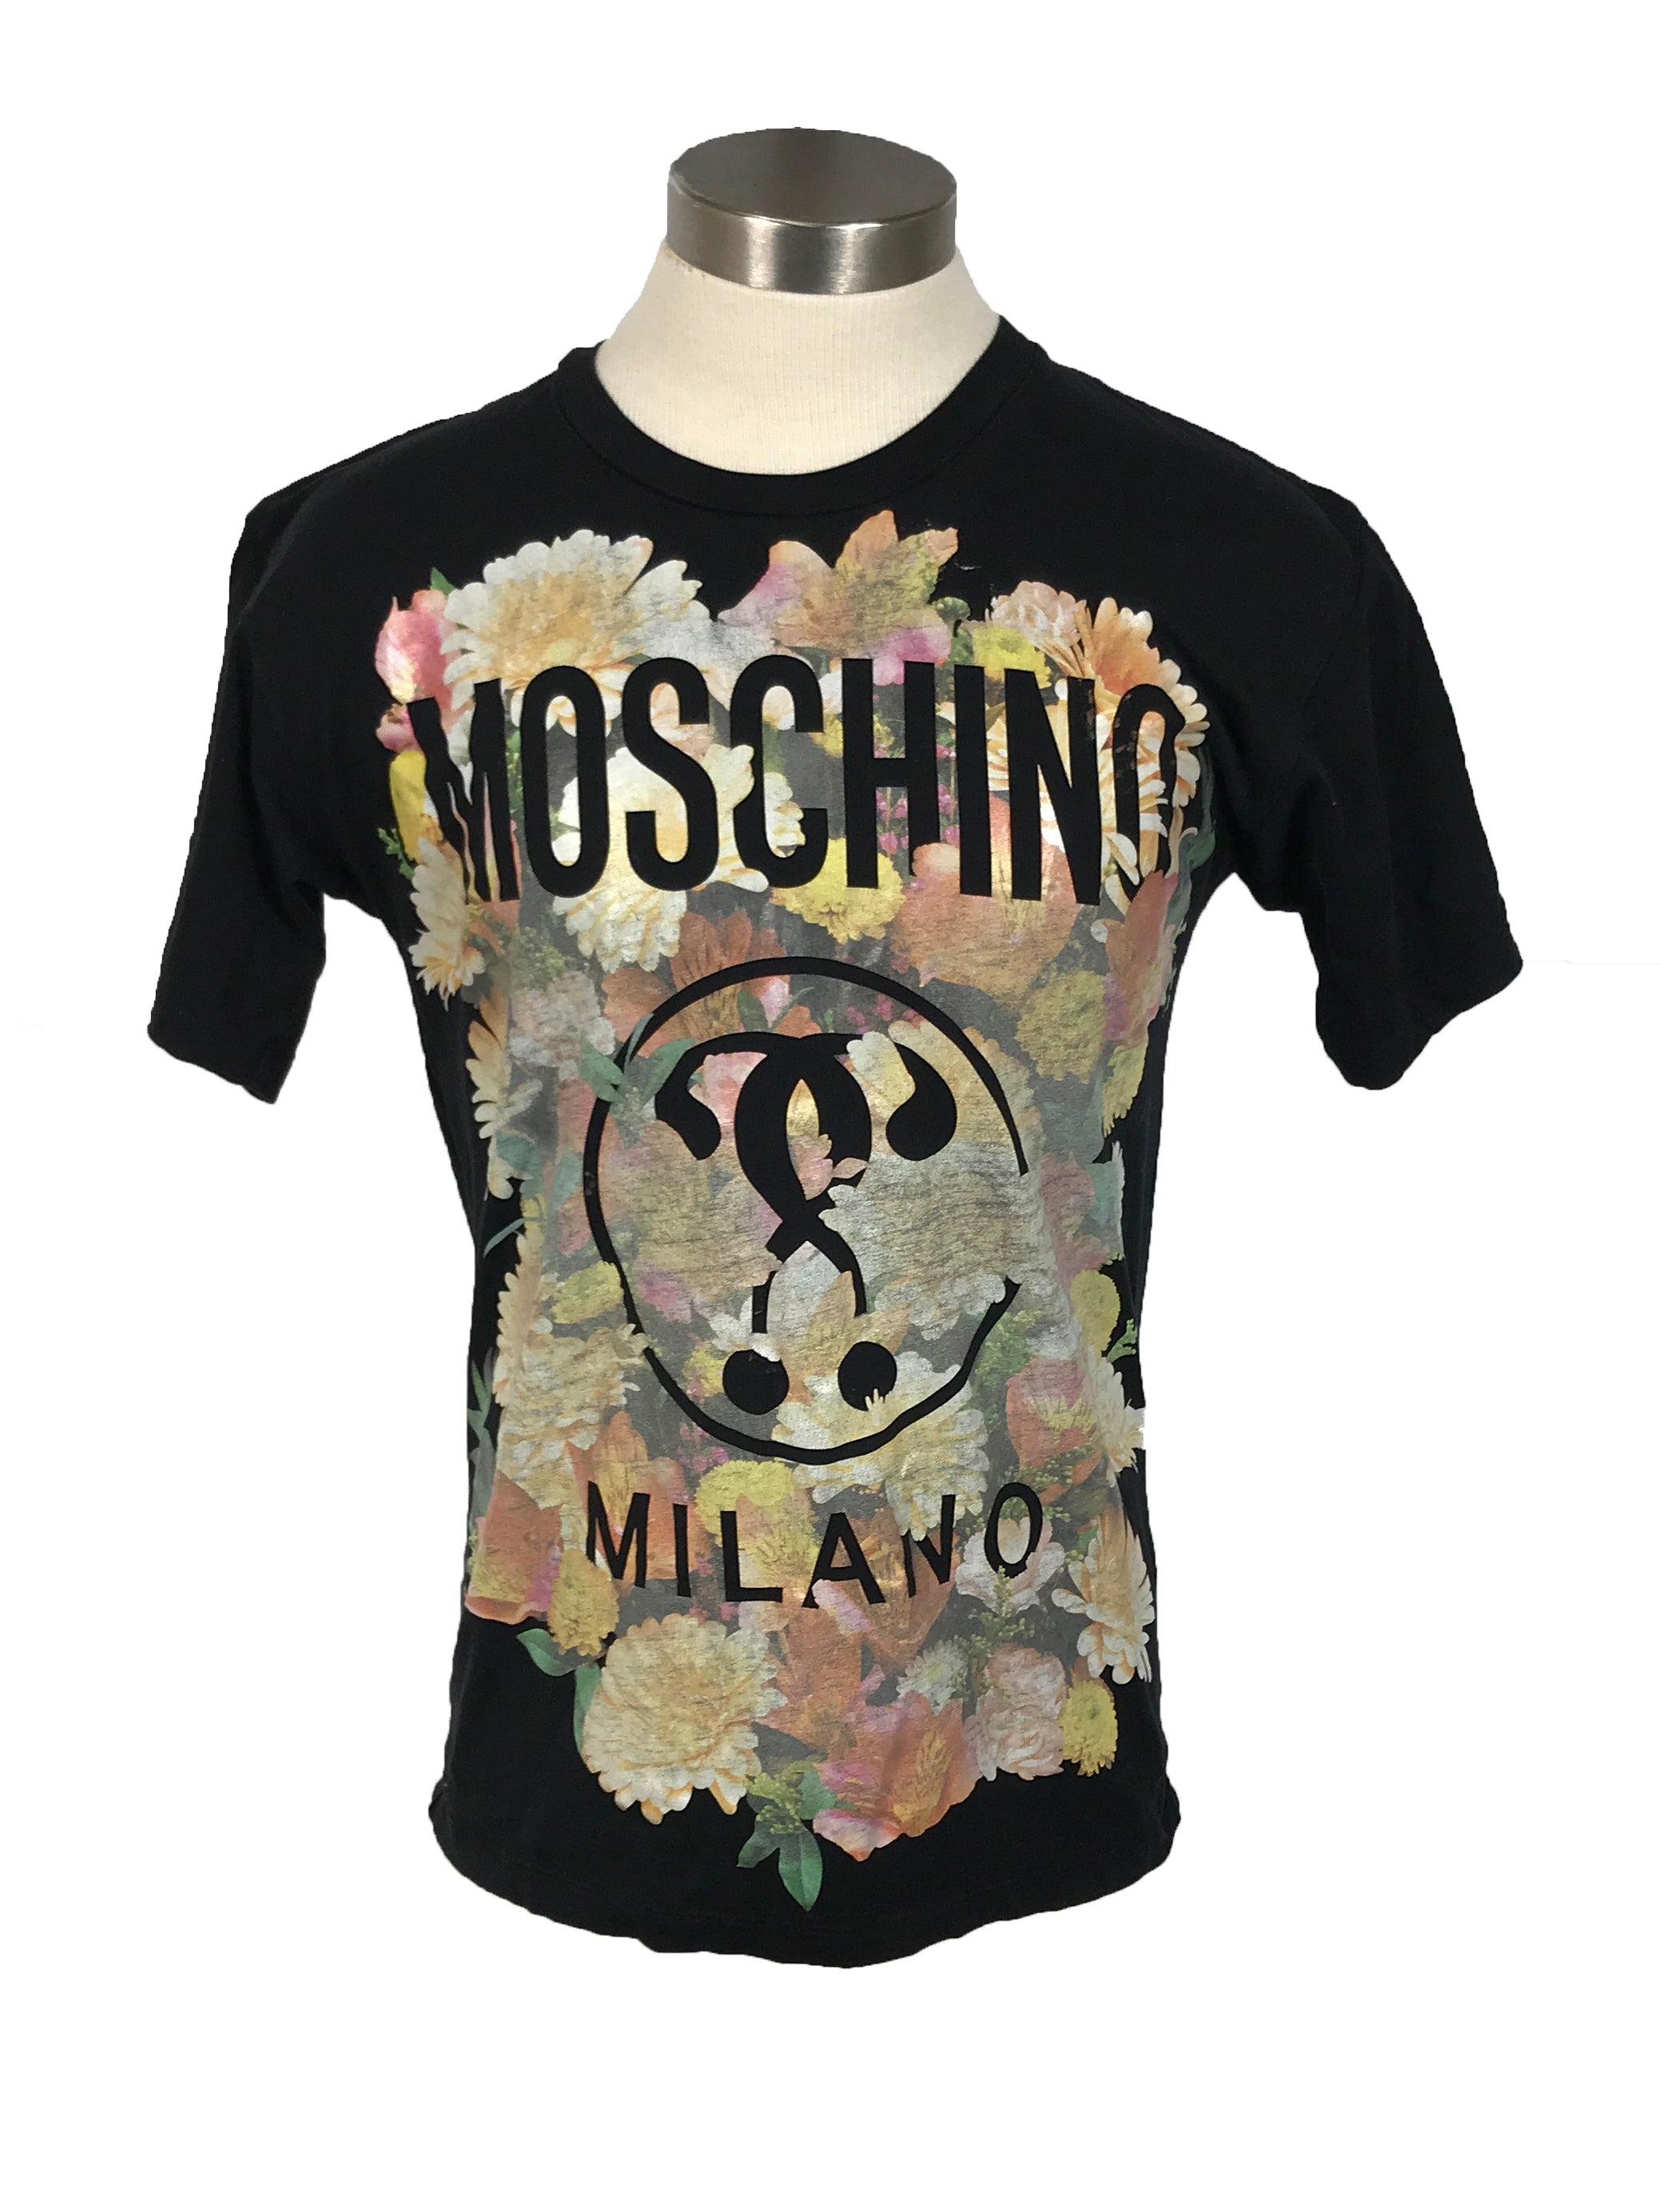 Moschino Black Floral T-Shirt Men's Size Medium